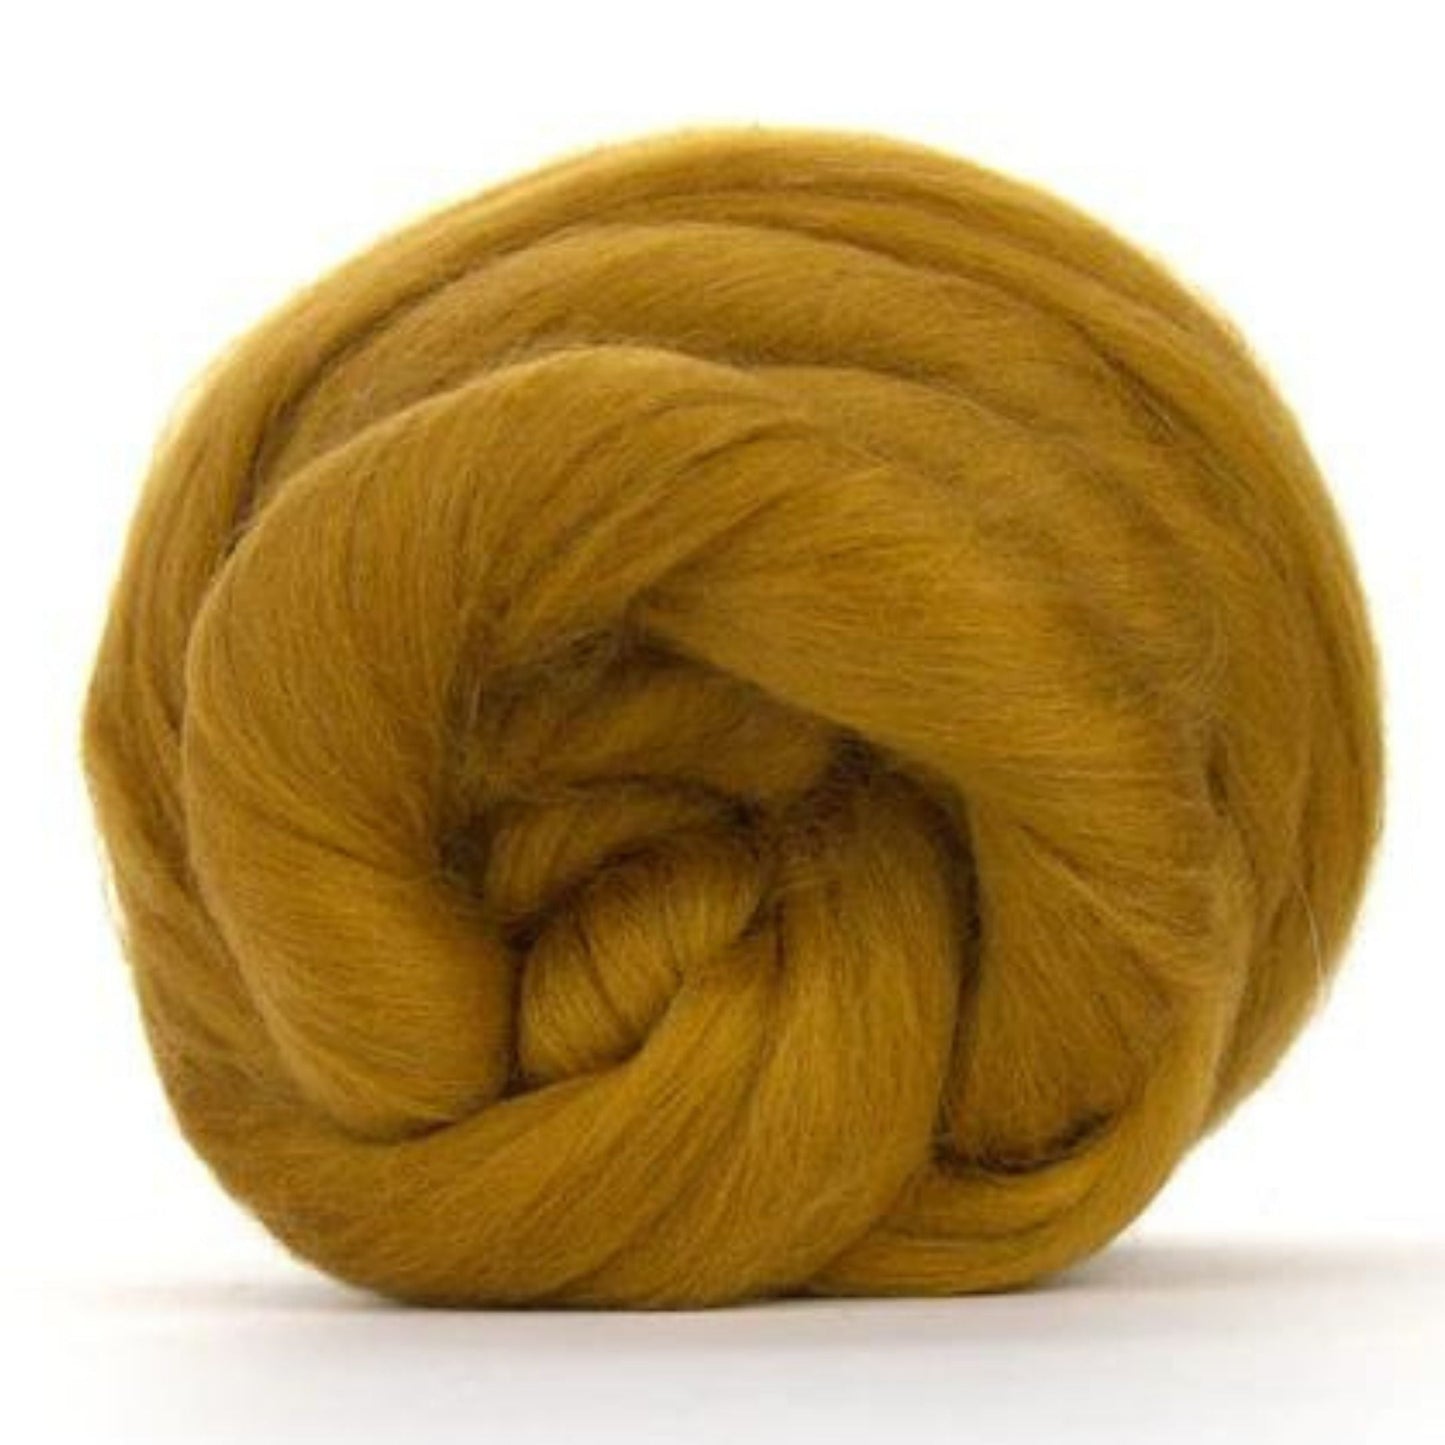 Dyed Merino Wool Tops | Premium 22 Micron, 64 Count Wool - Textile Indie 